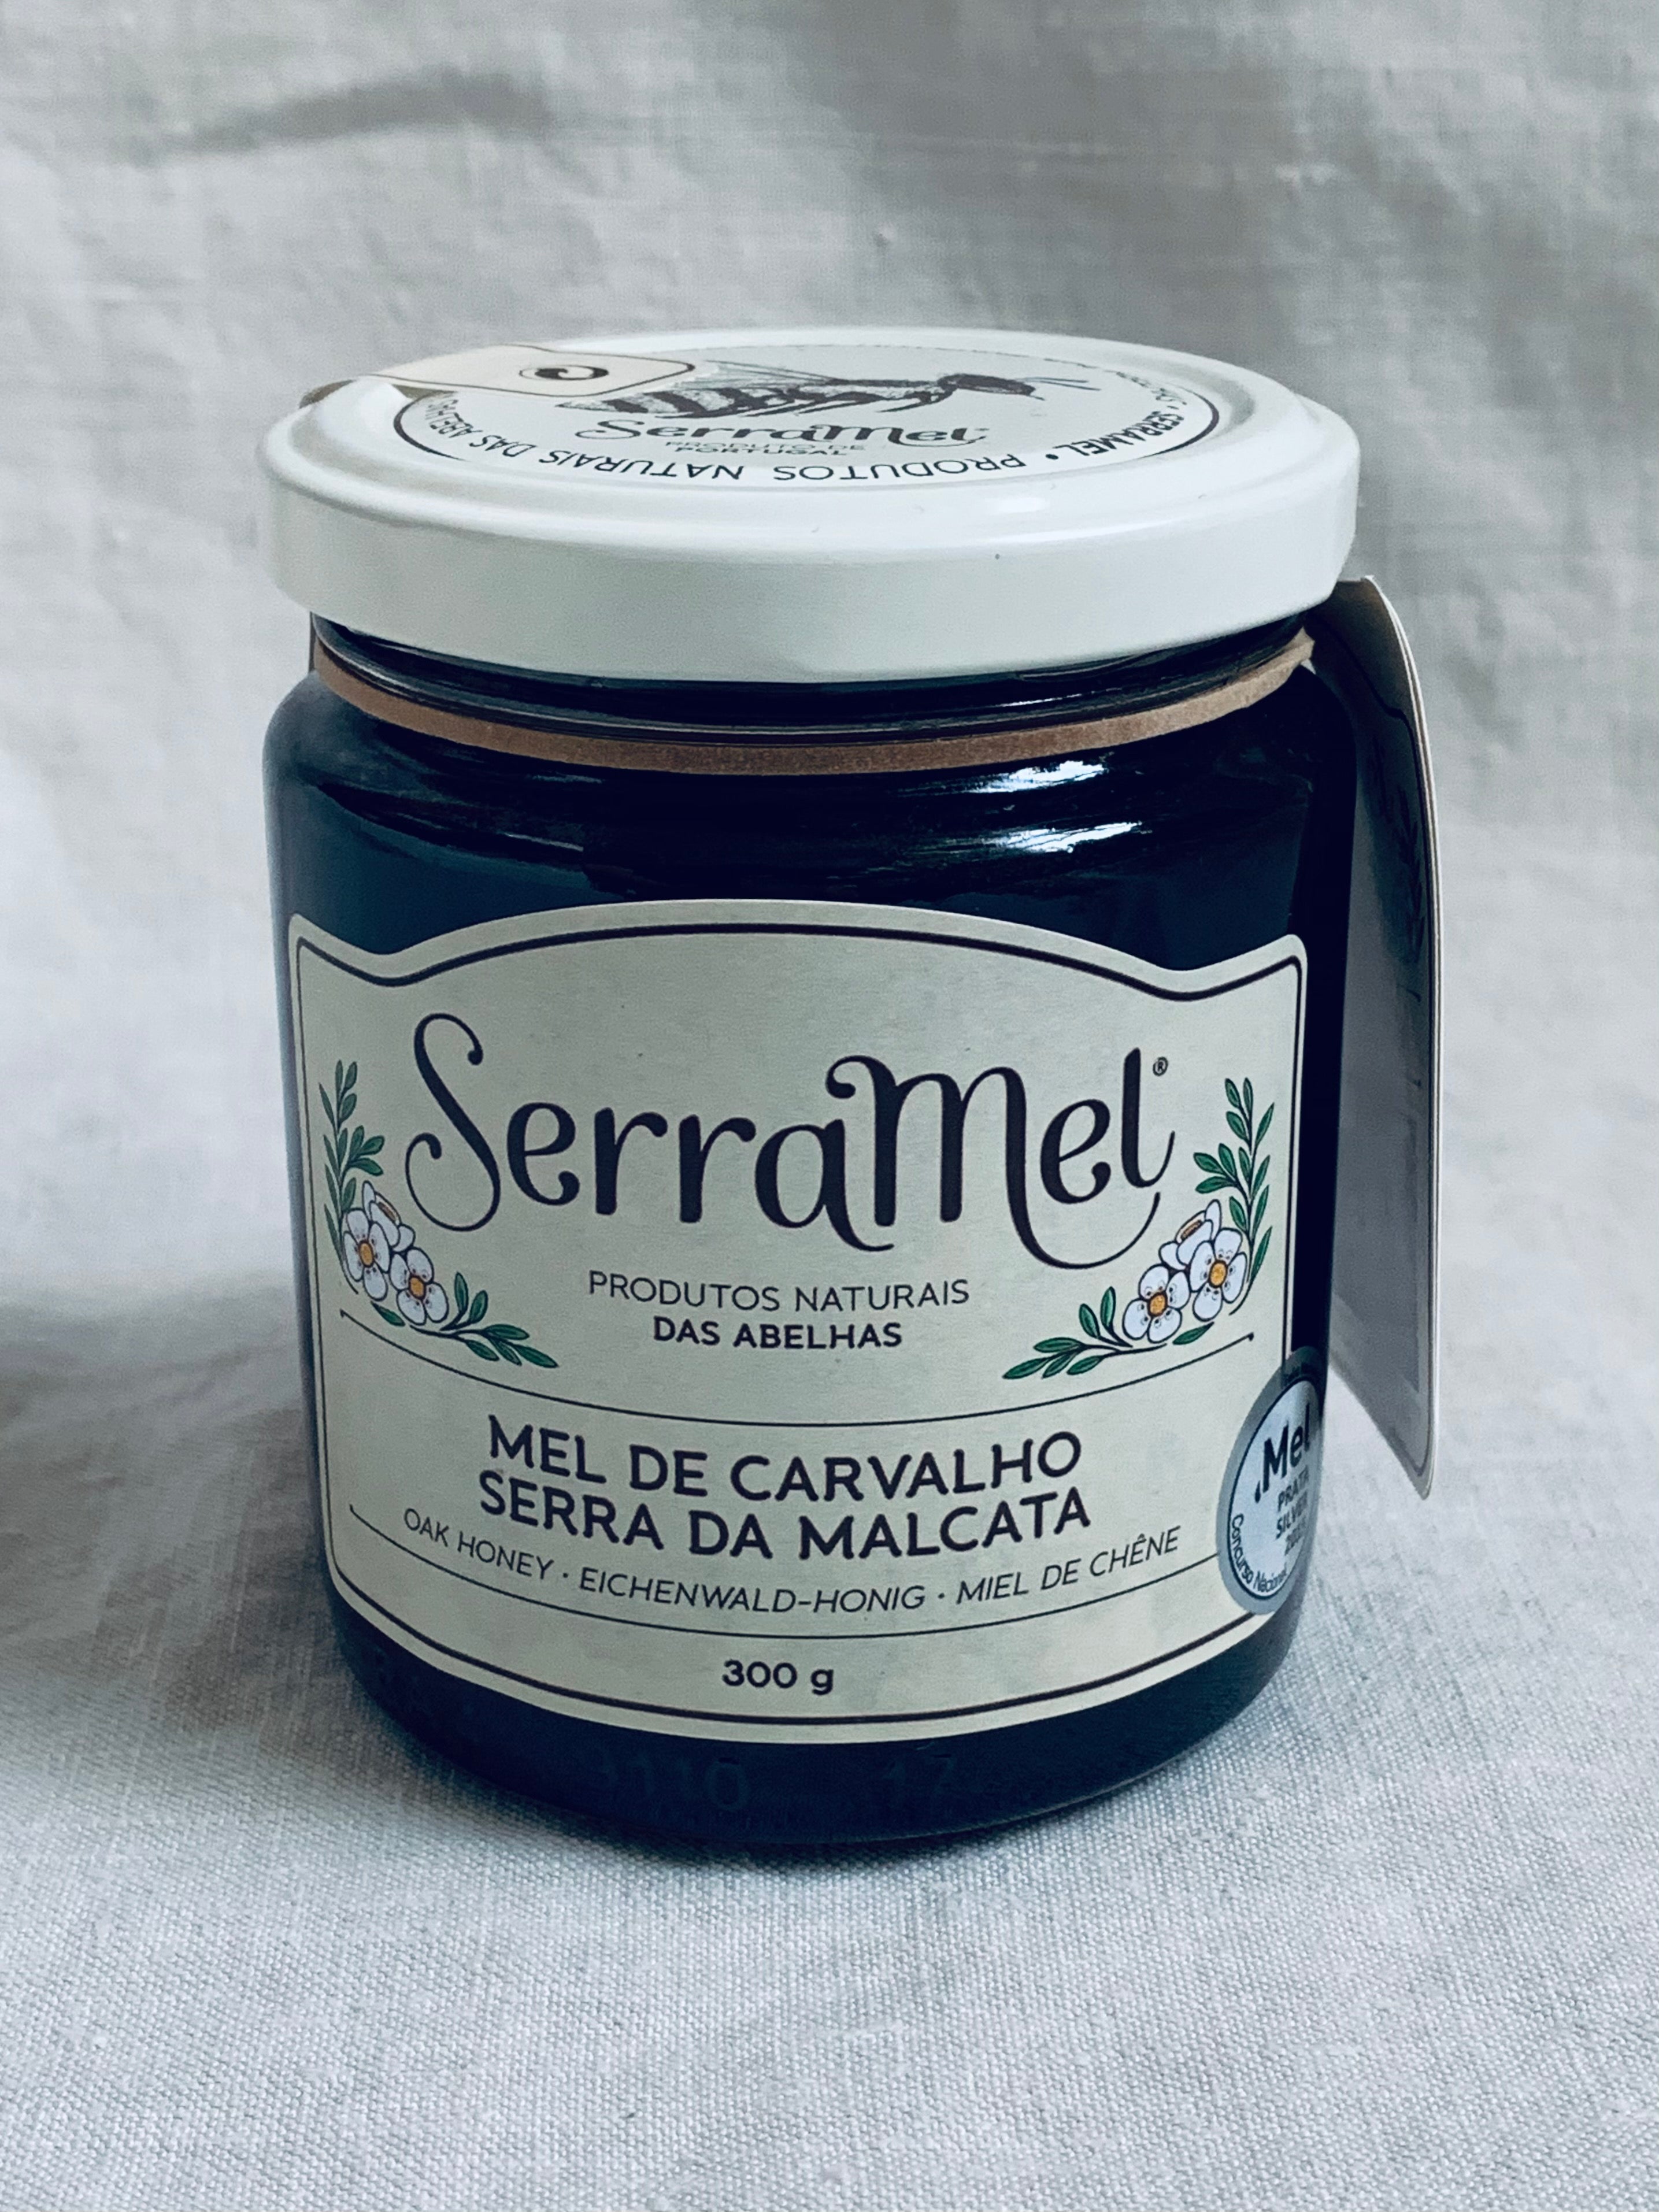 Serramel Honey Collection